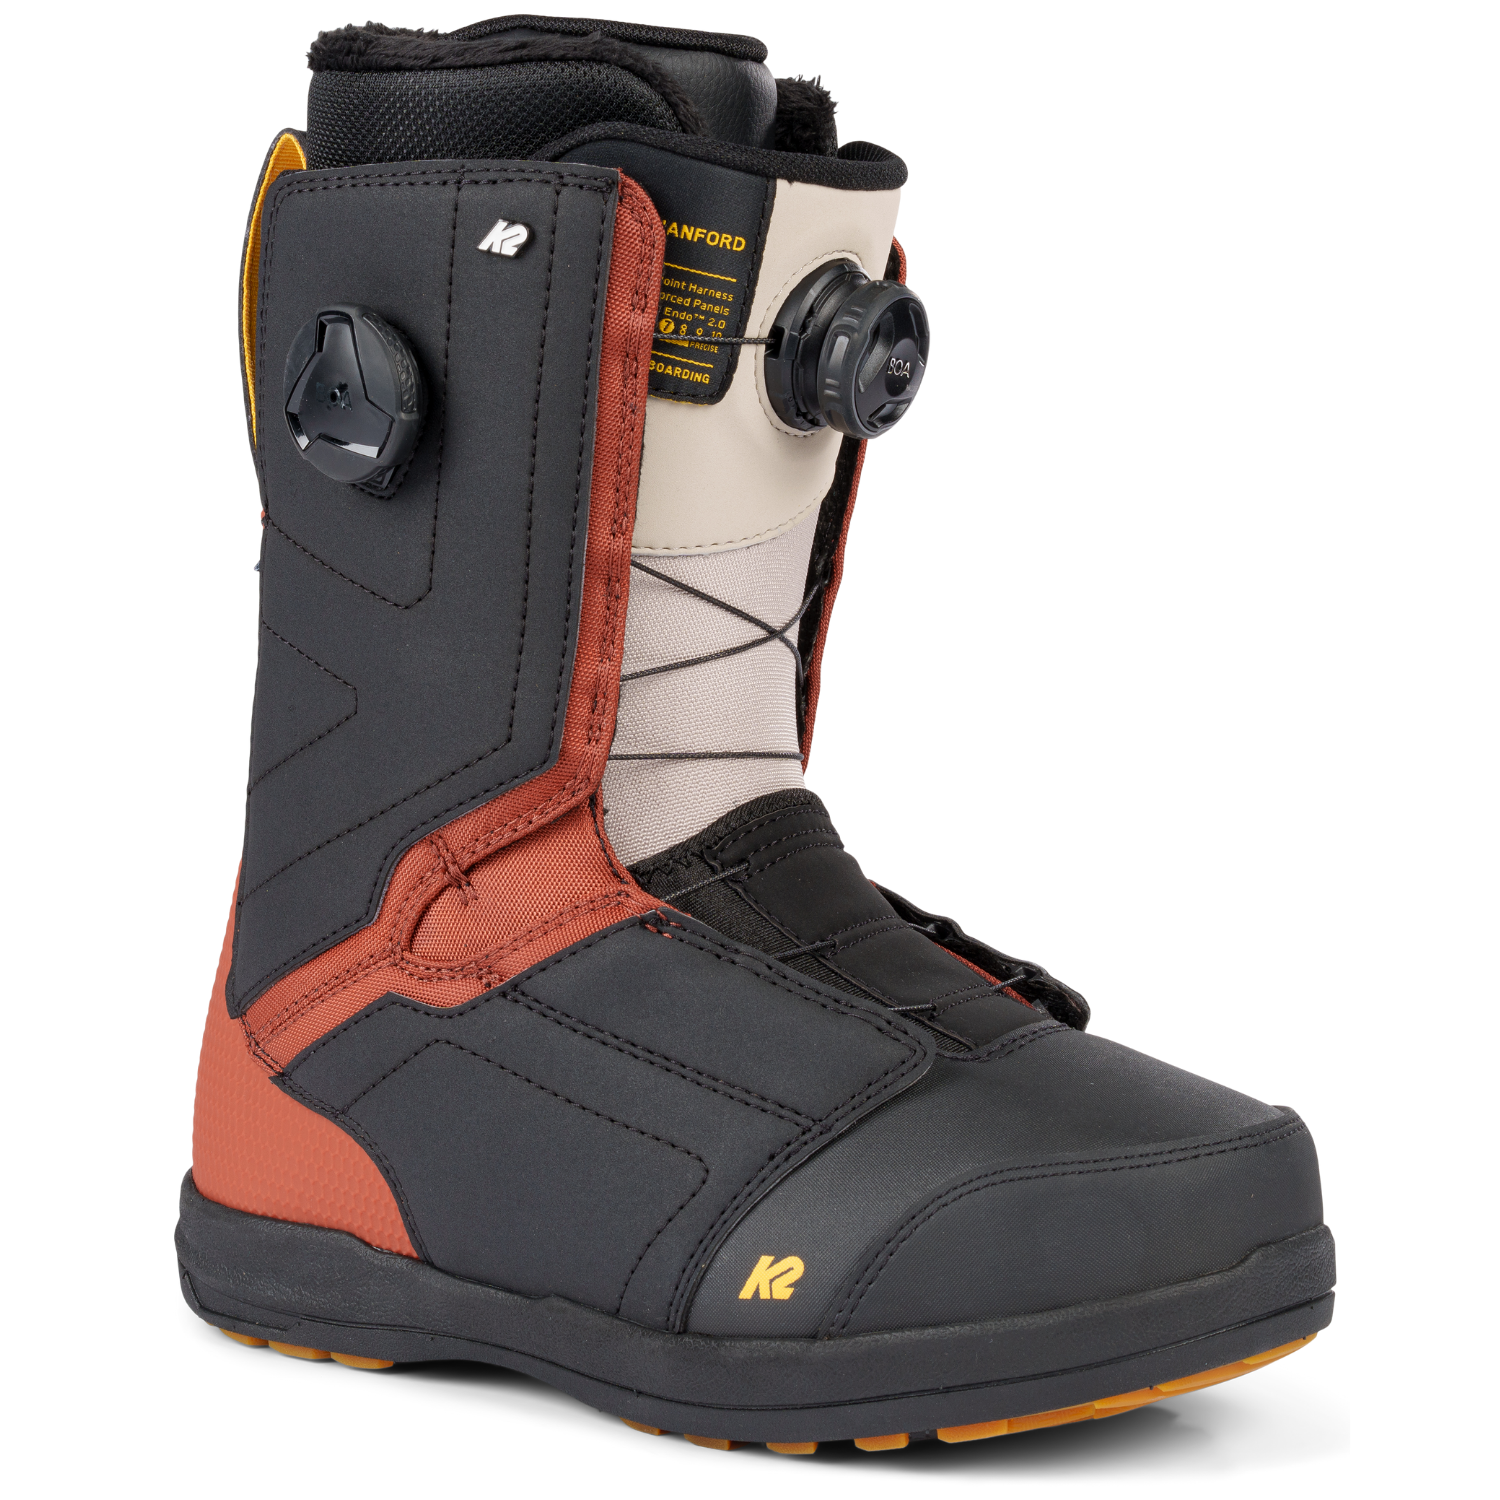 Sitcom veiligheid Post 2023 K2 Hanford Snowboarding Boots For Sale